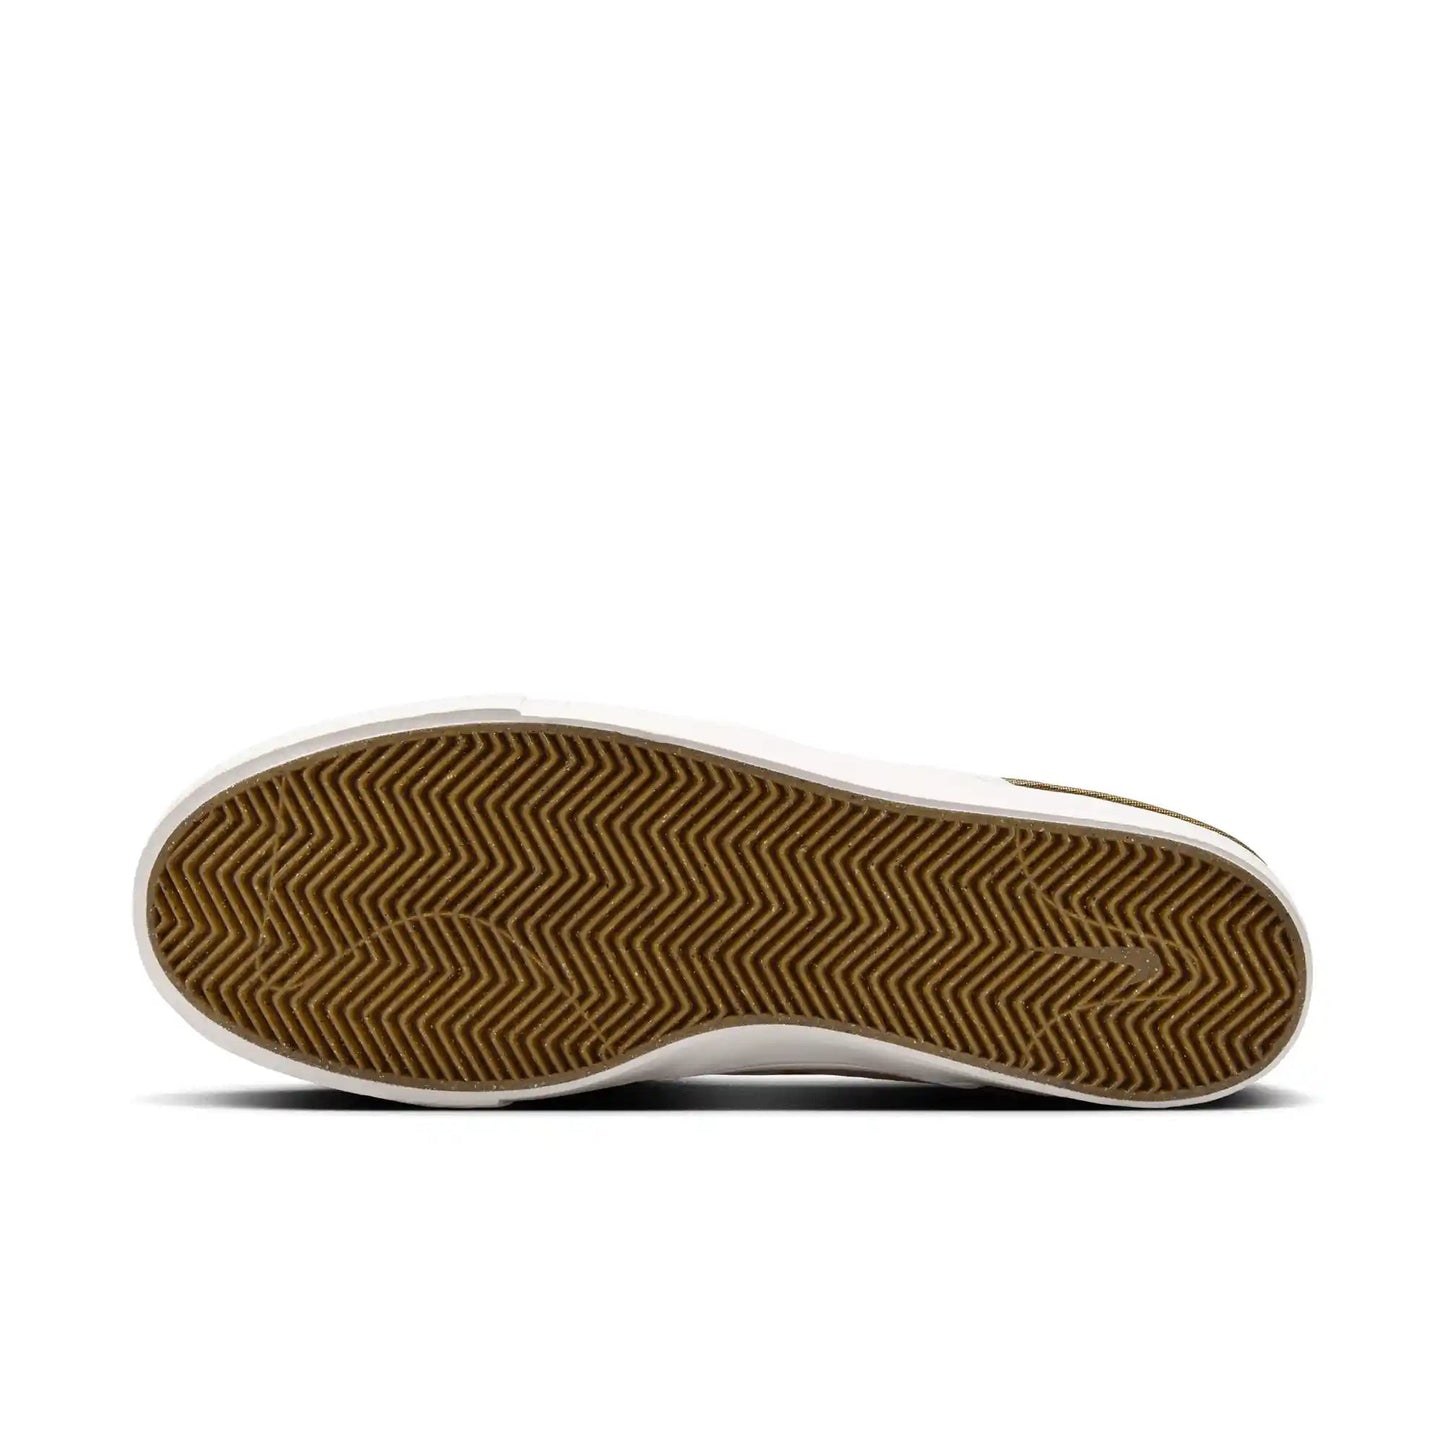 Nike SB Zoom Janoski OG+ Premium, sesame/flt gold-bronzine-sail - Tiki Room Skateboards - 9